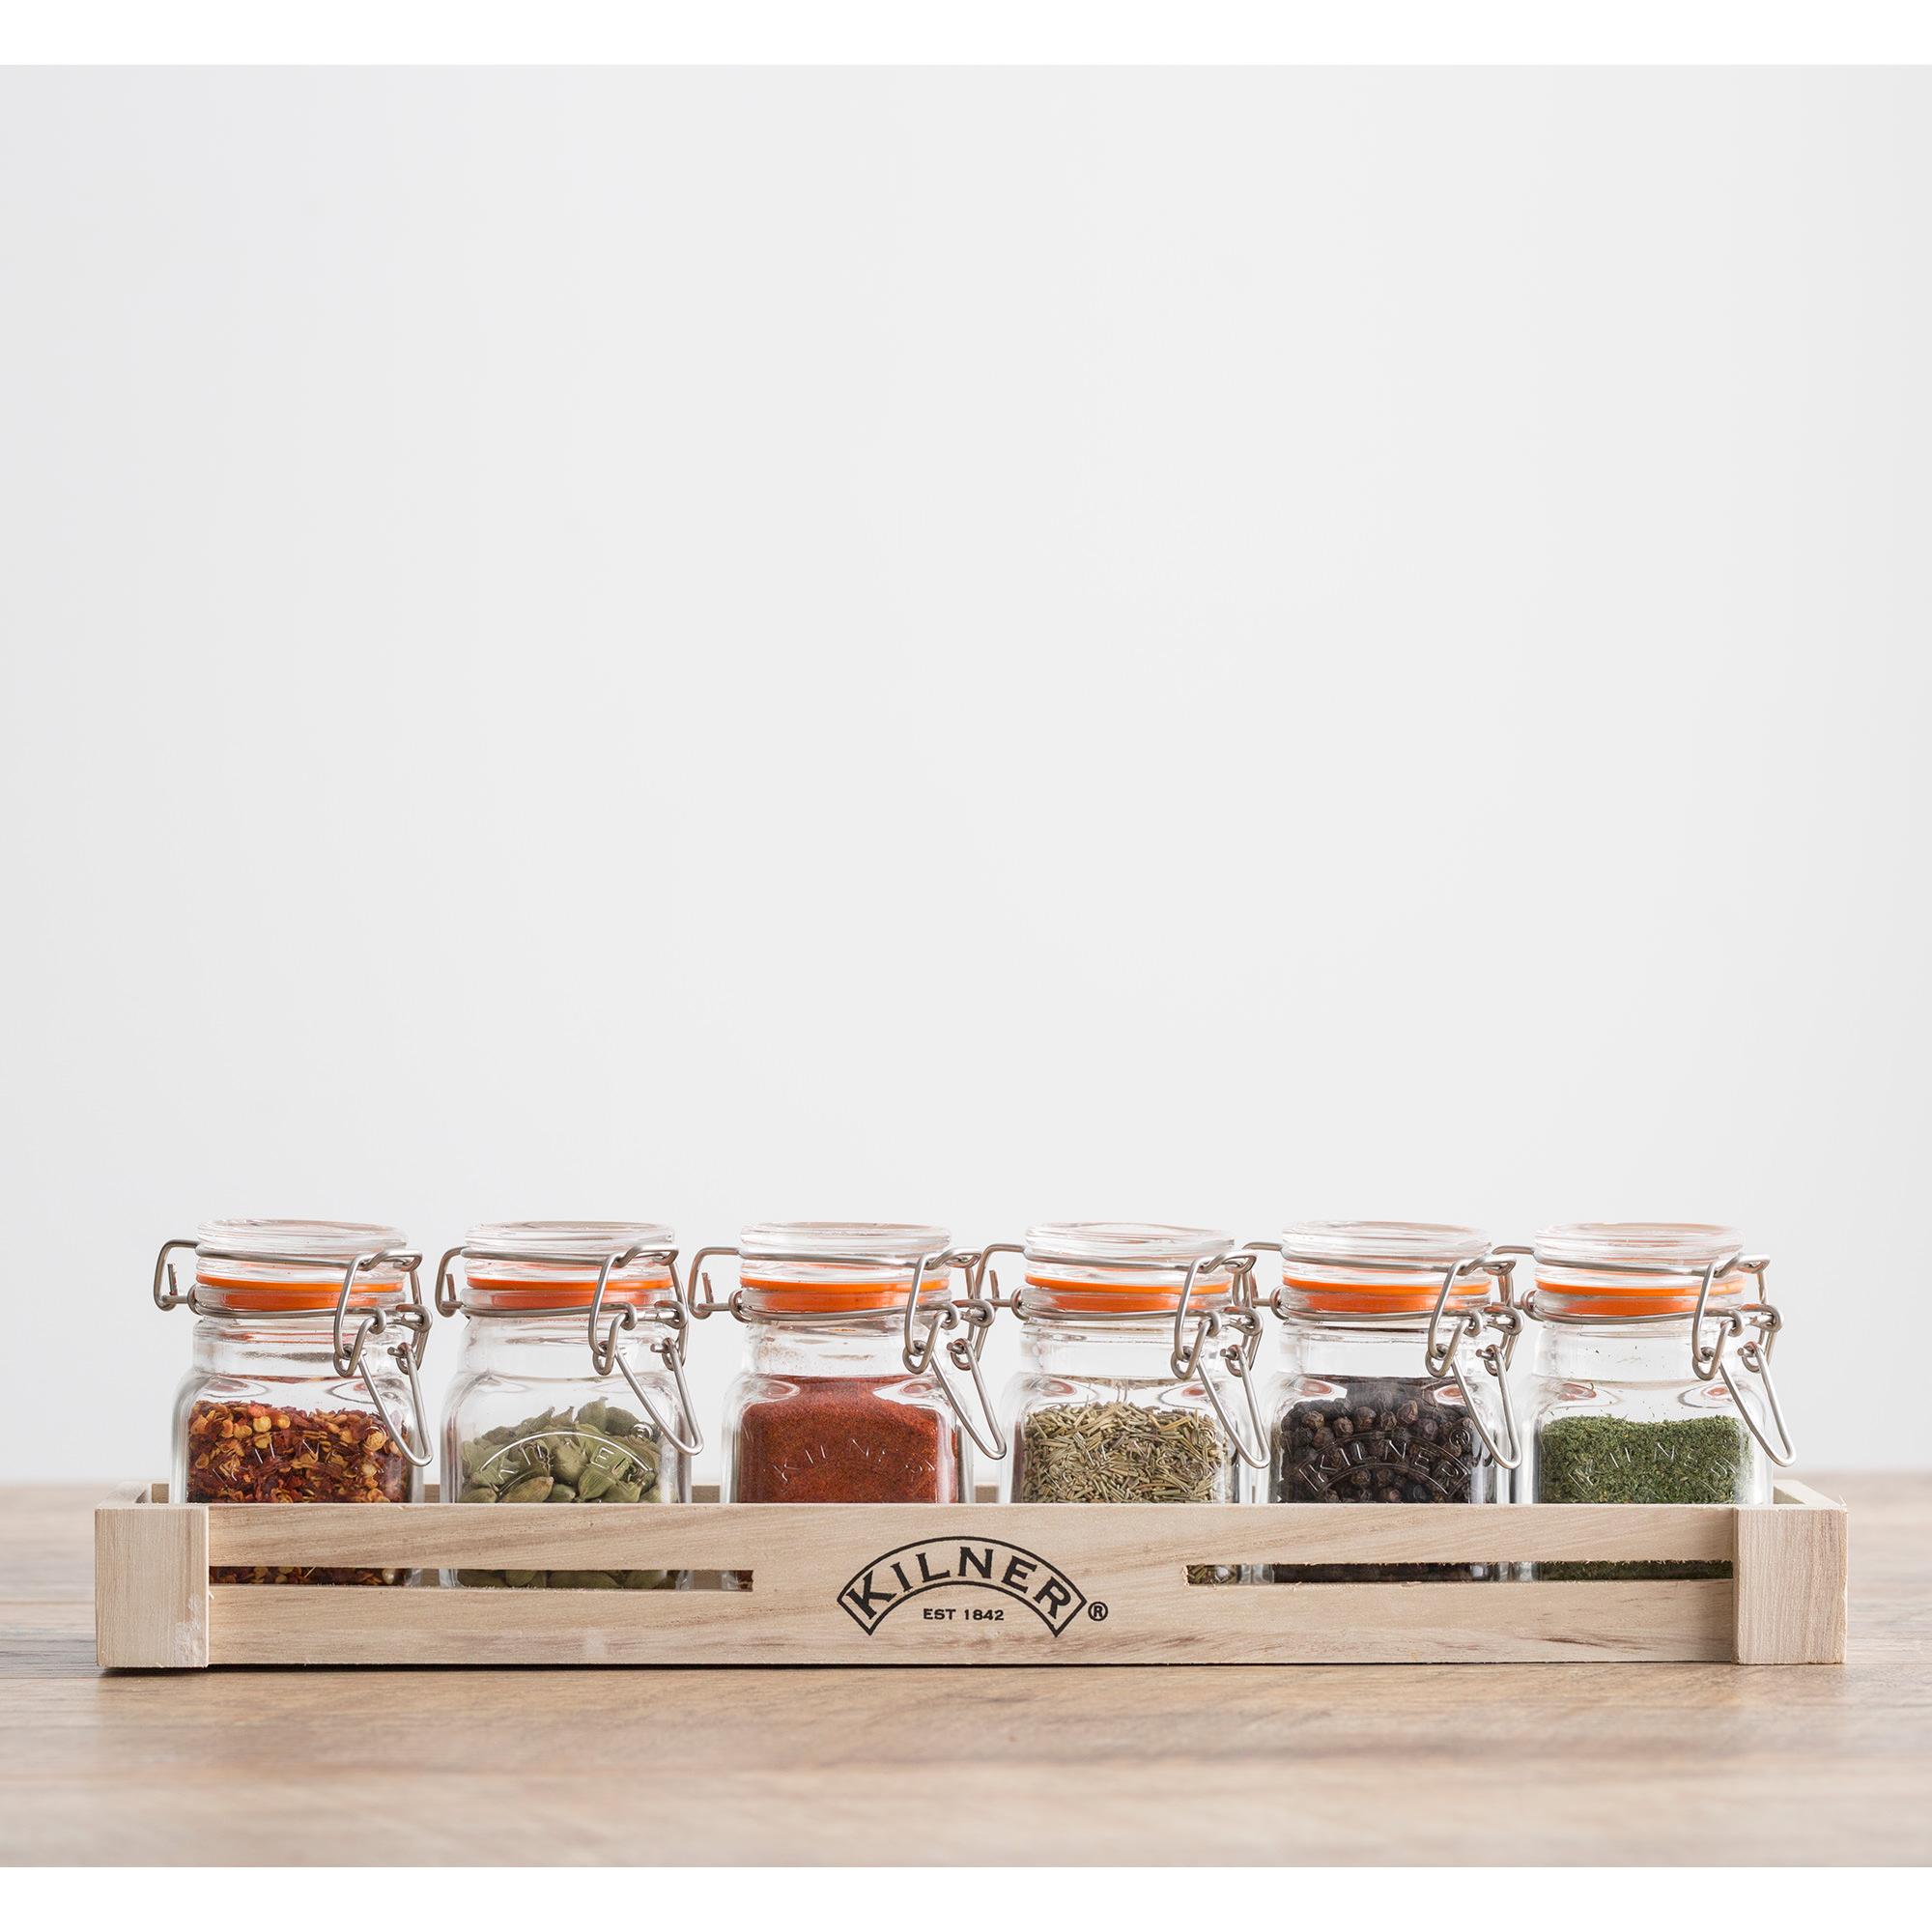 Kilner Spice Jar with Wooden Caddy Set 7pc Image 3